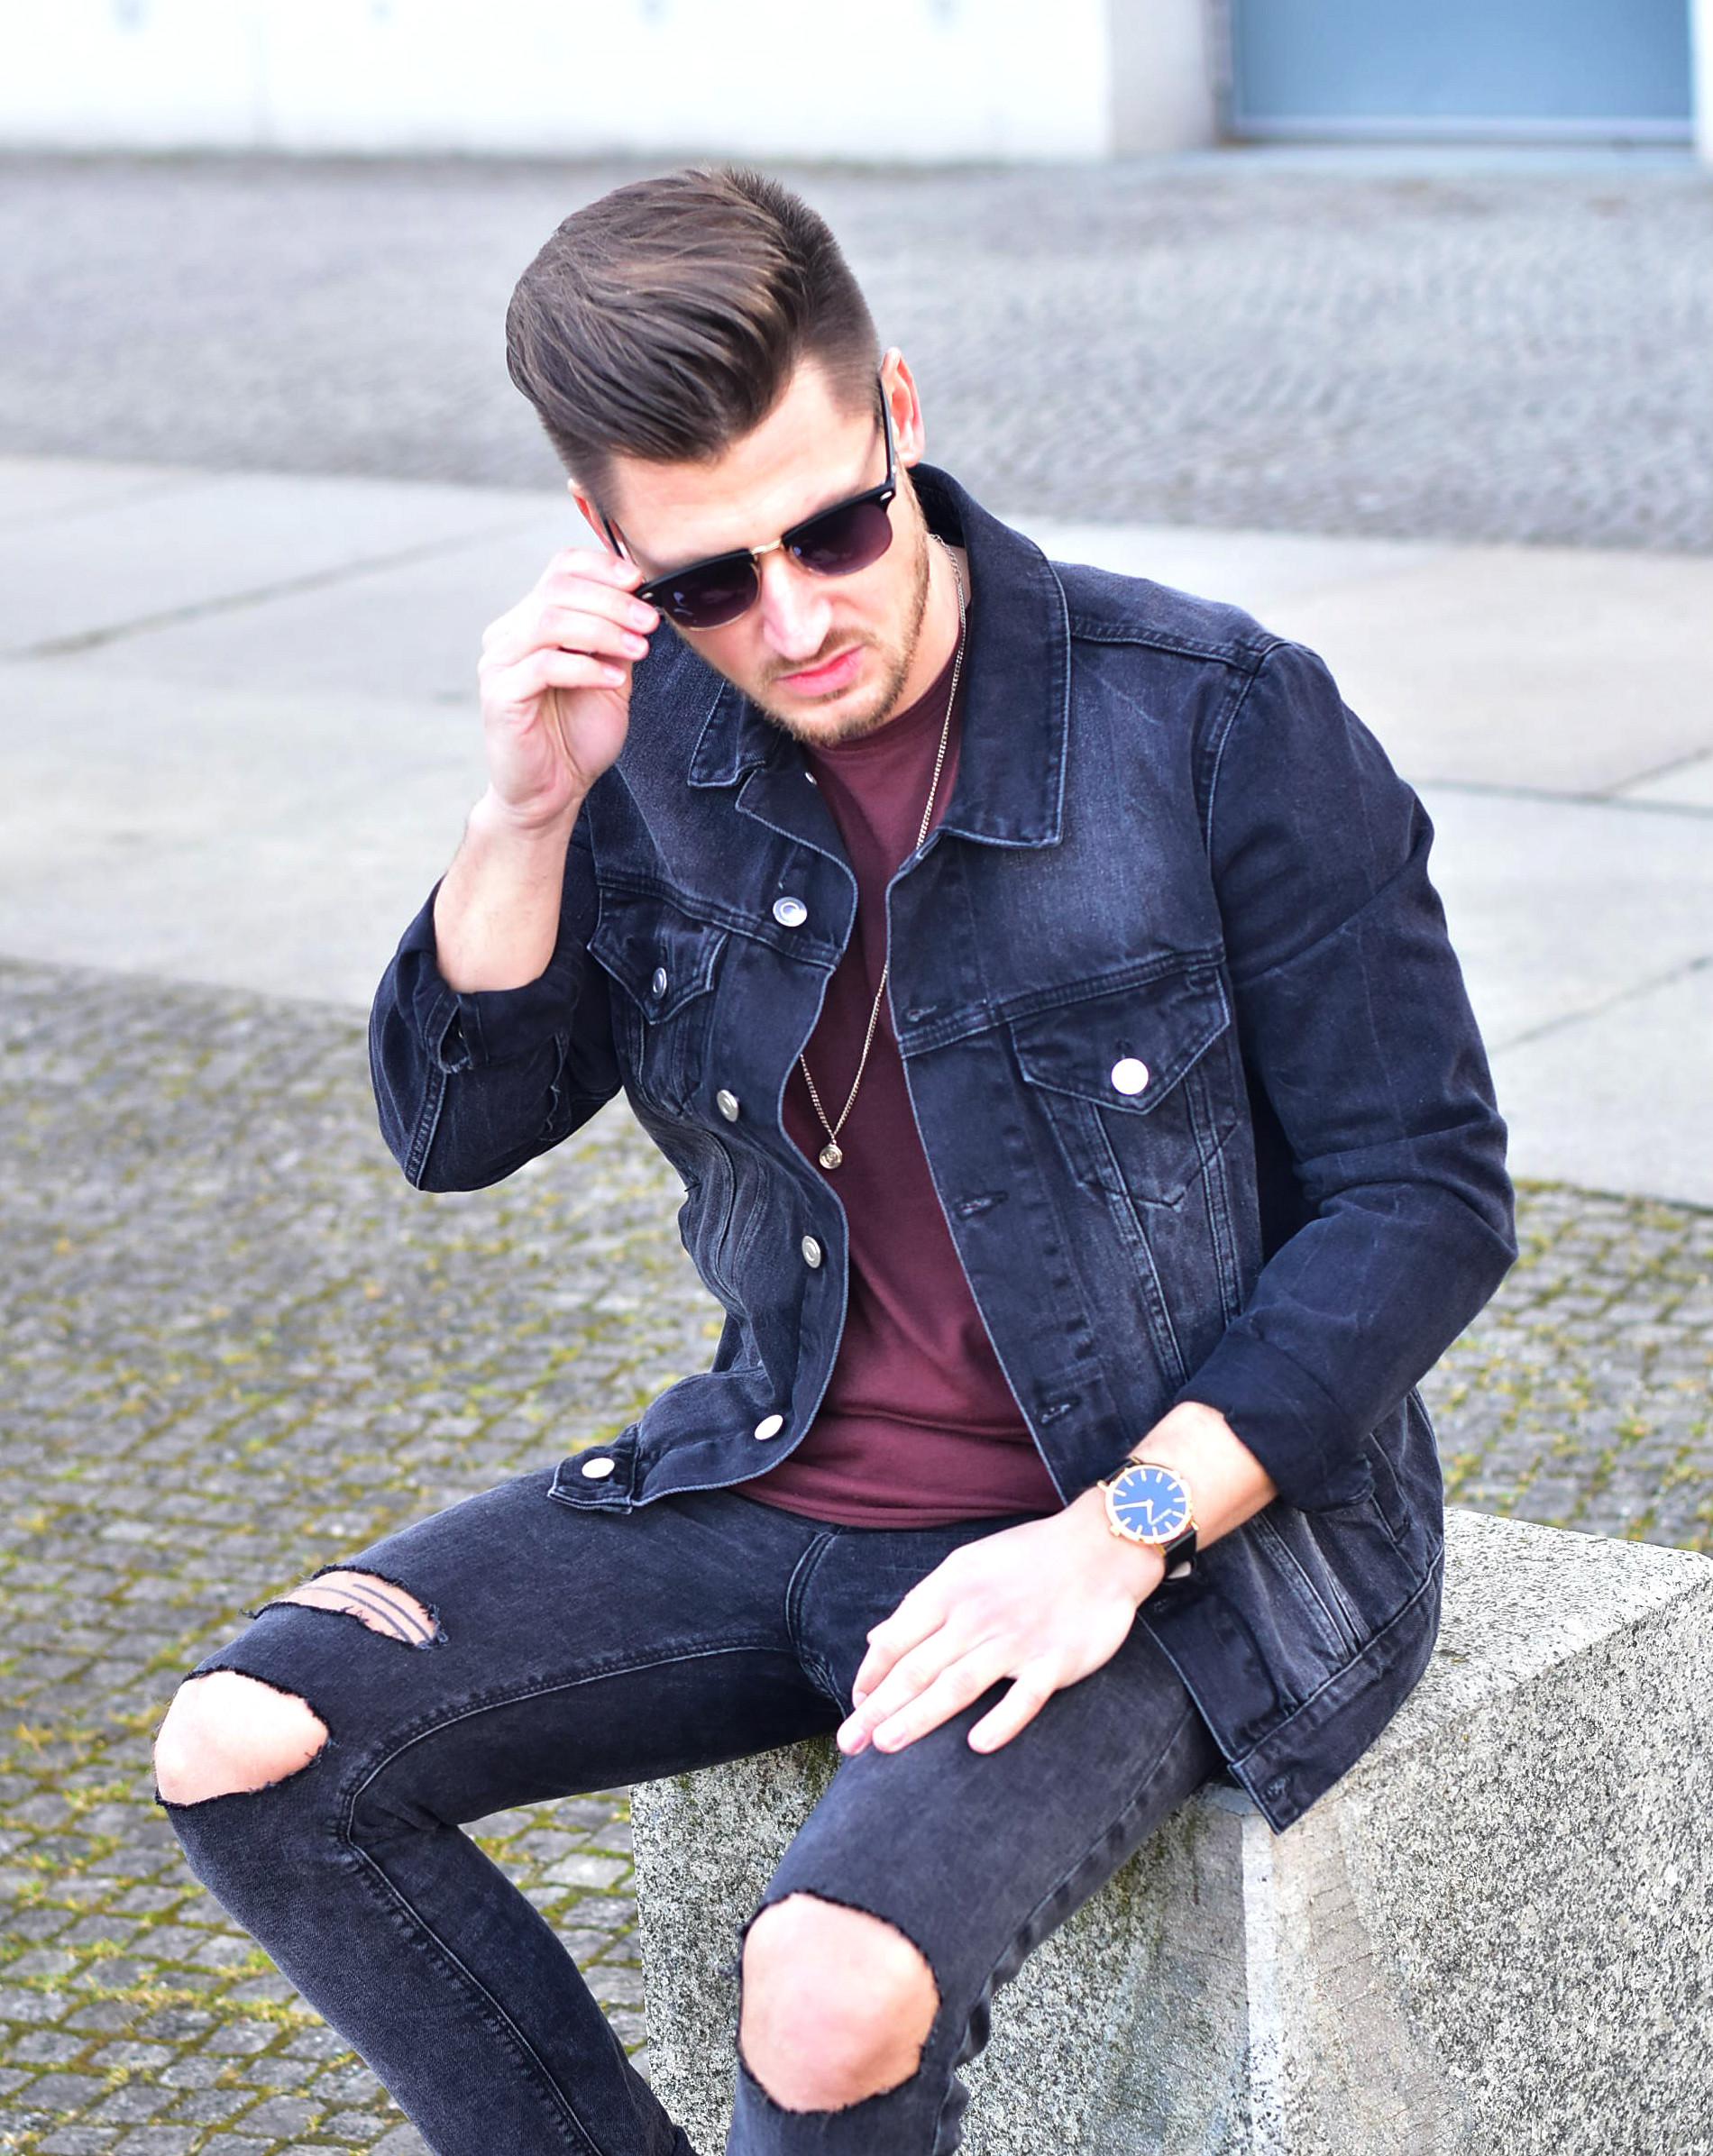 Tommeezjerry-Styleblog-Männerblog-Modeblog-Berlin-Outfit-Jeanslook-Ripped-Jeans-Jeansjacke-Adidas-Superstar-Adidas-Longshirt-Goldschmukc